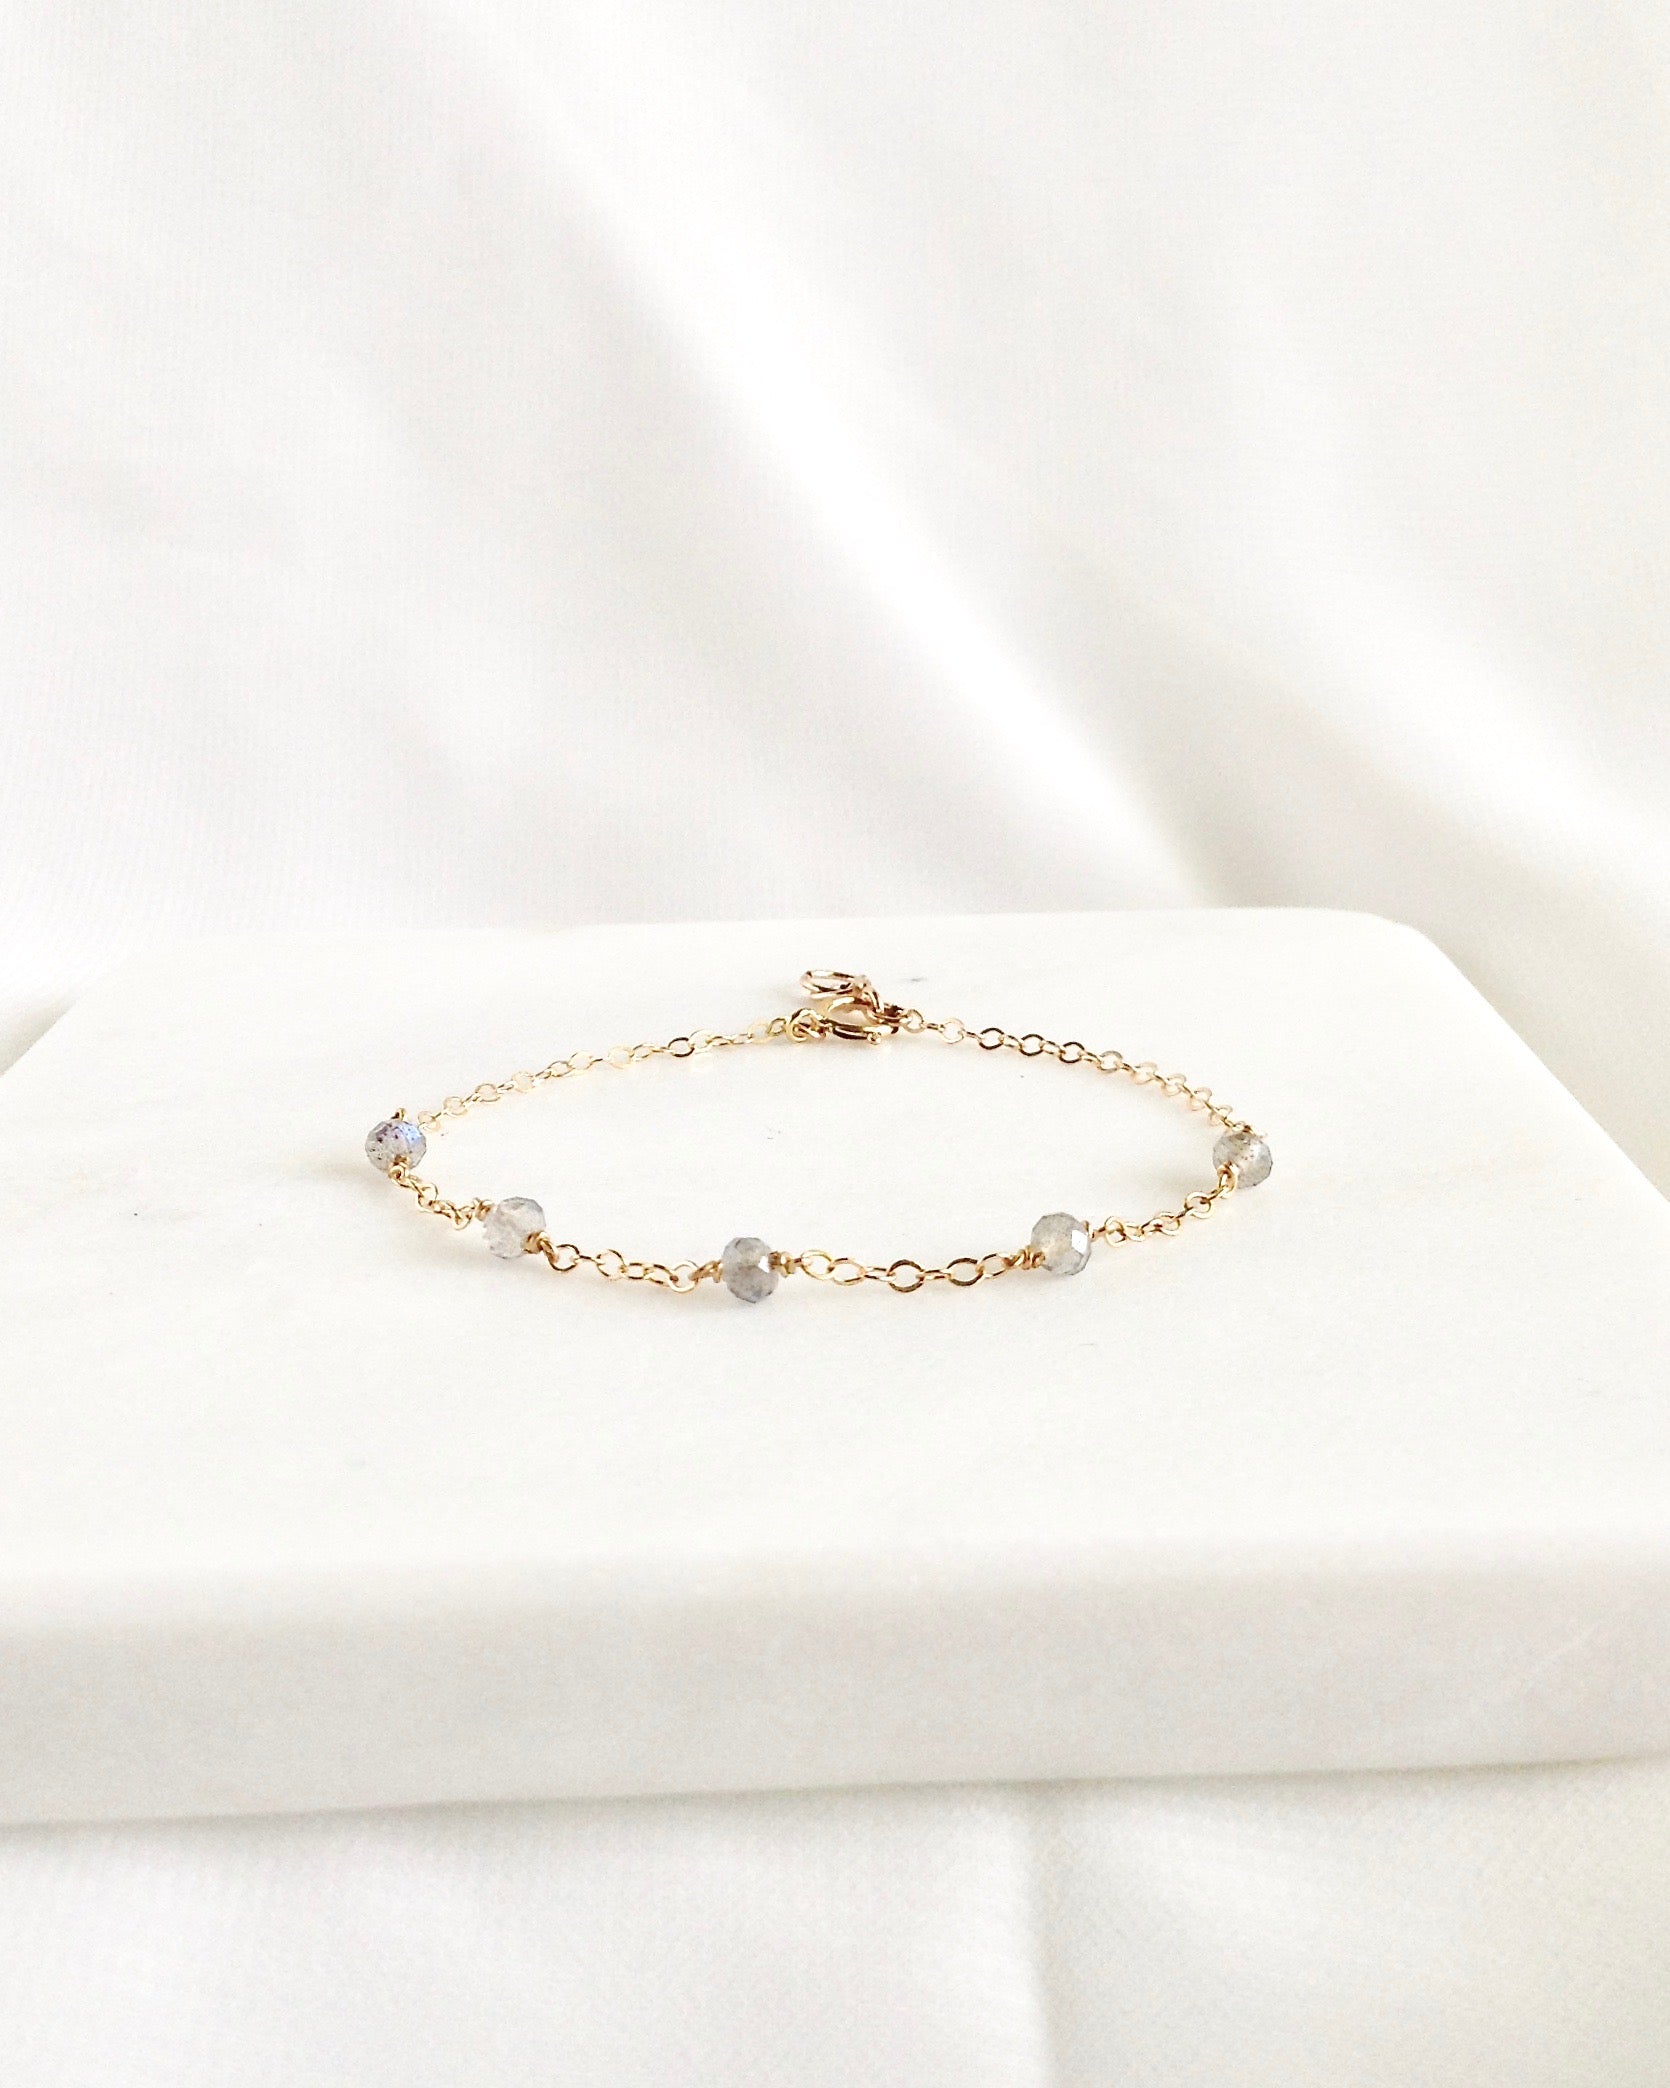 Labradorite Dainty Gemstone Bracelet in Gold Filled or Sterling Silver | IB Jewelry